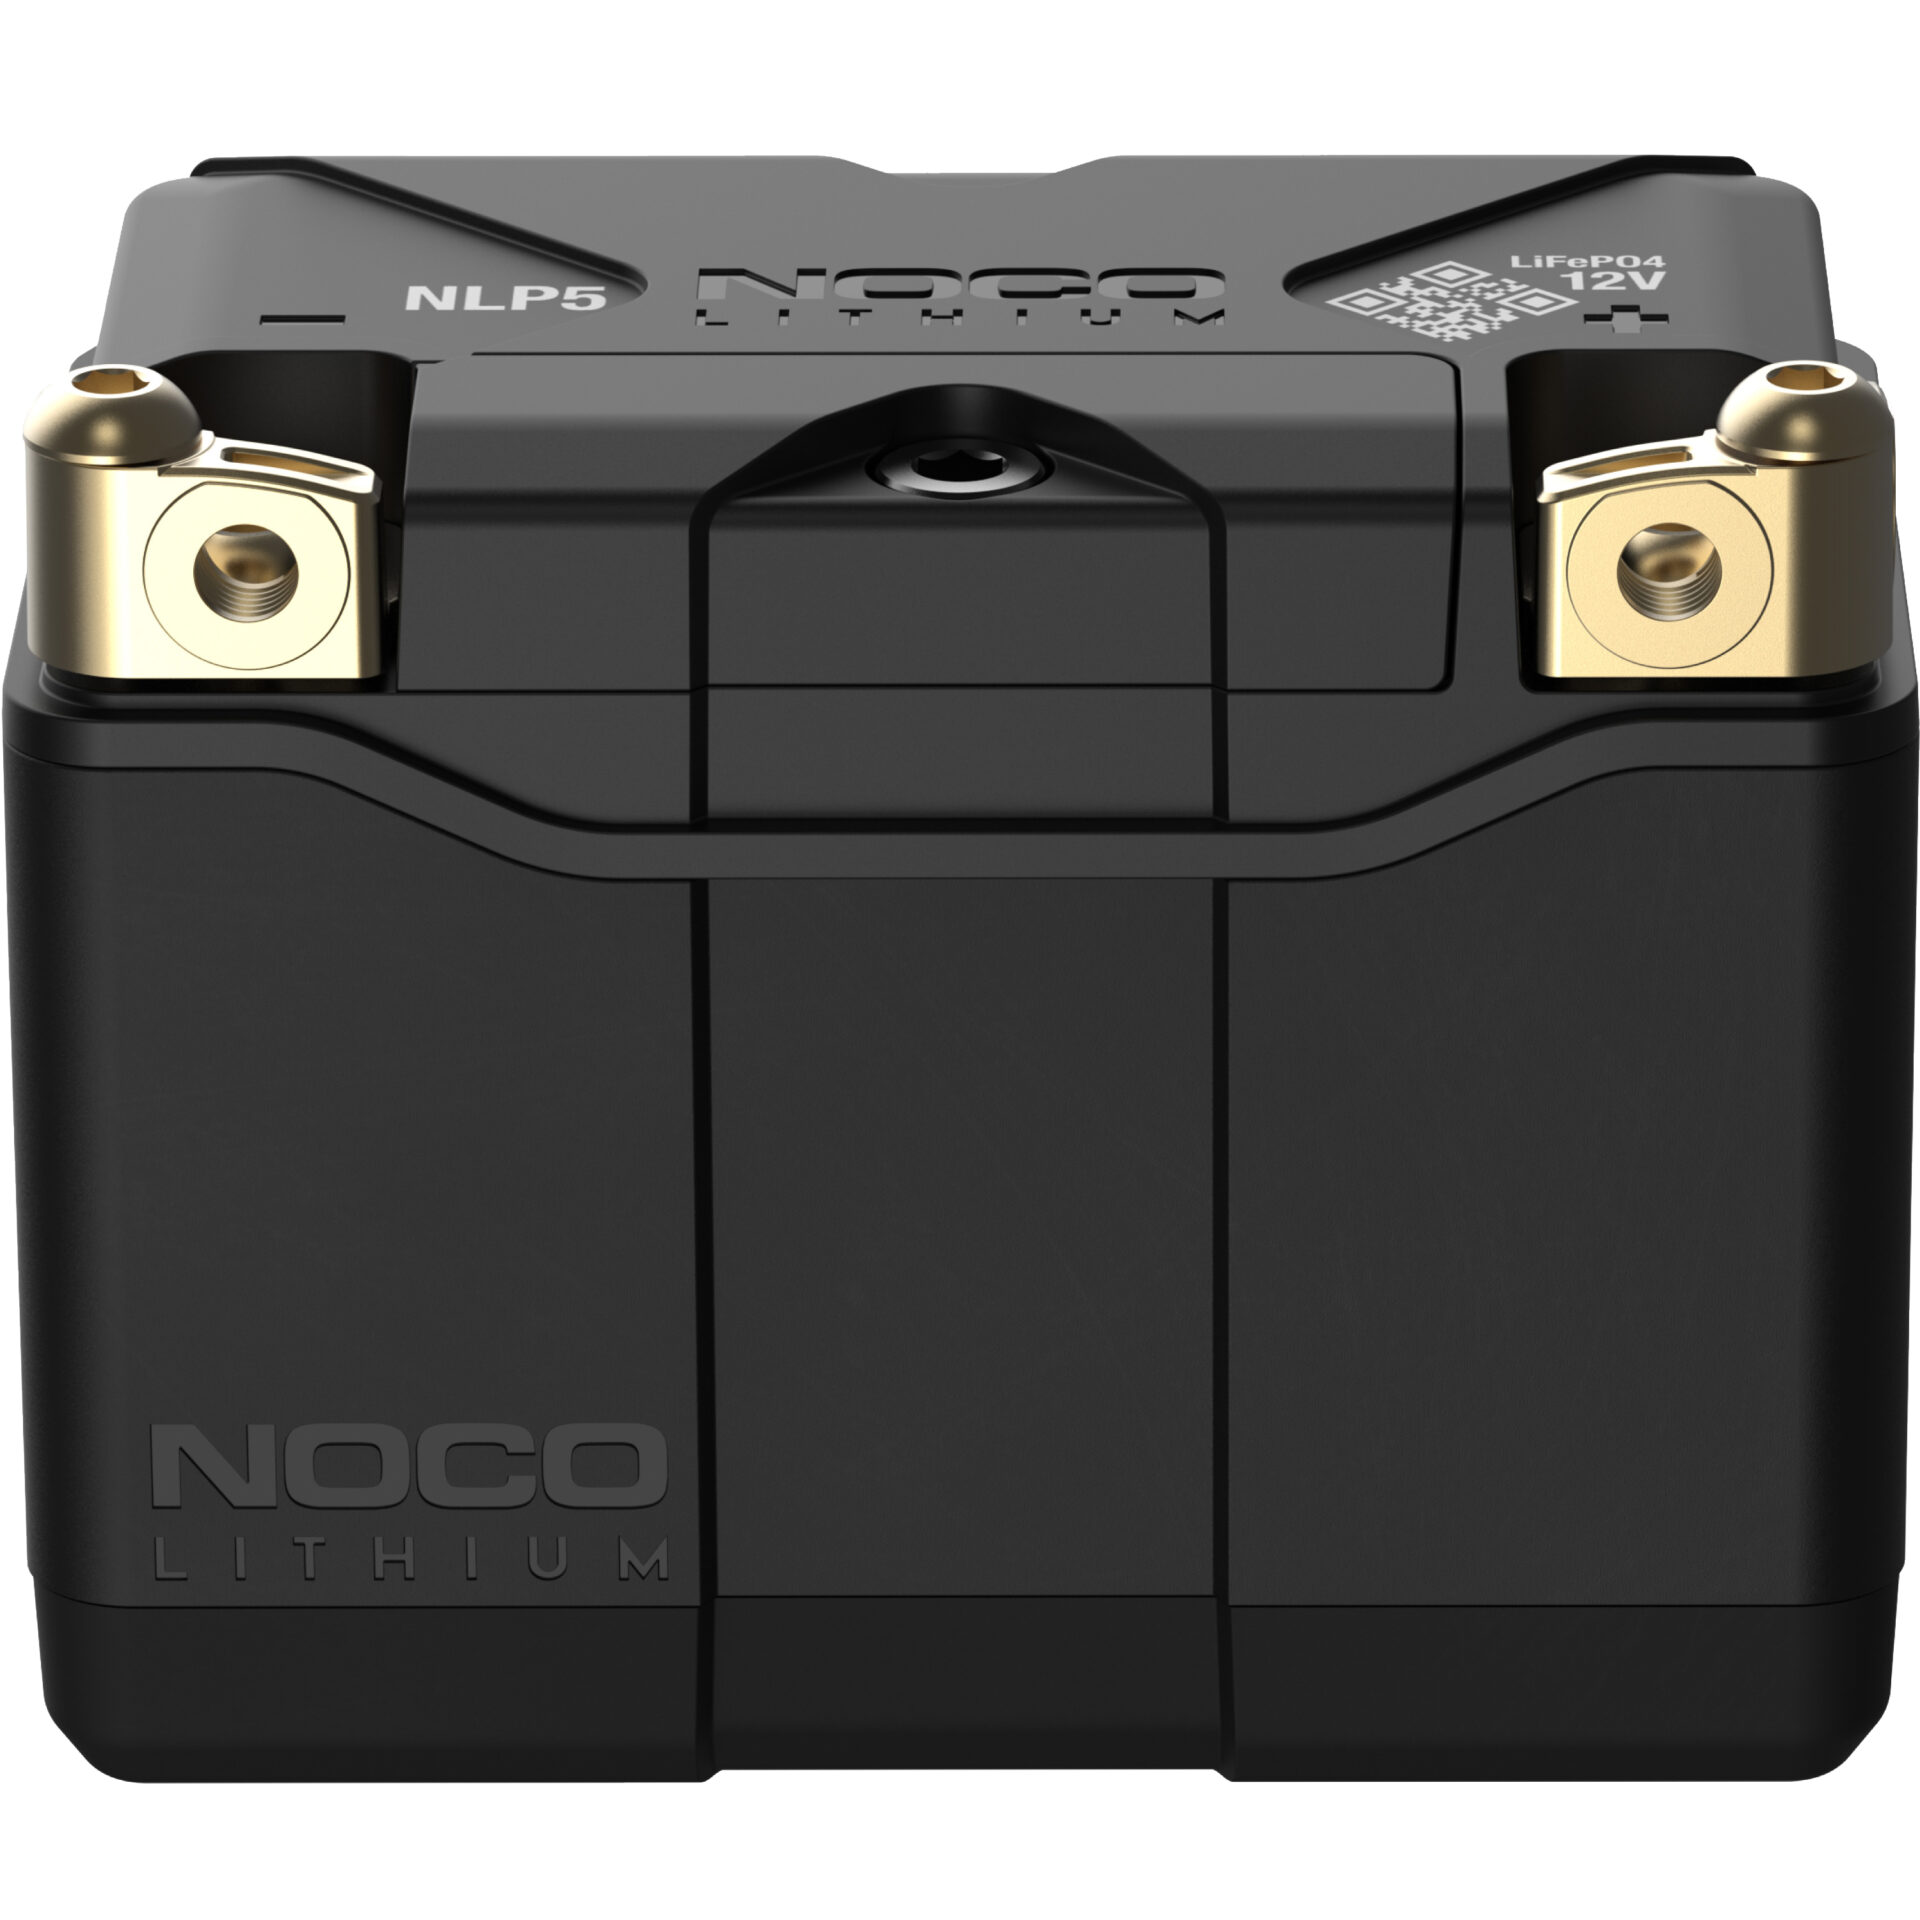 Noco Lithium Batteries for ATVs